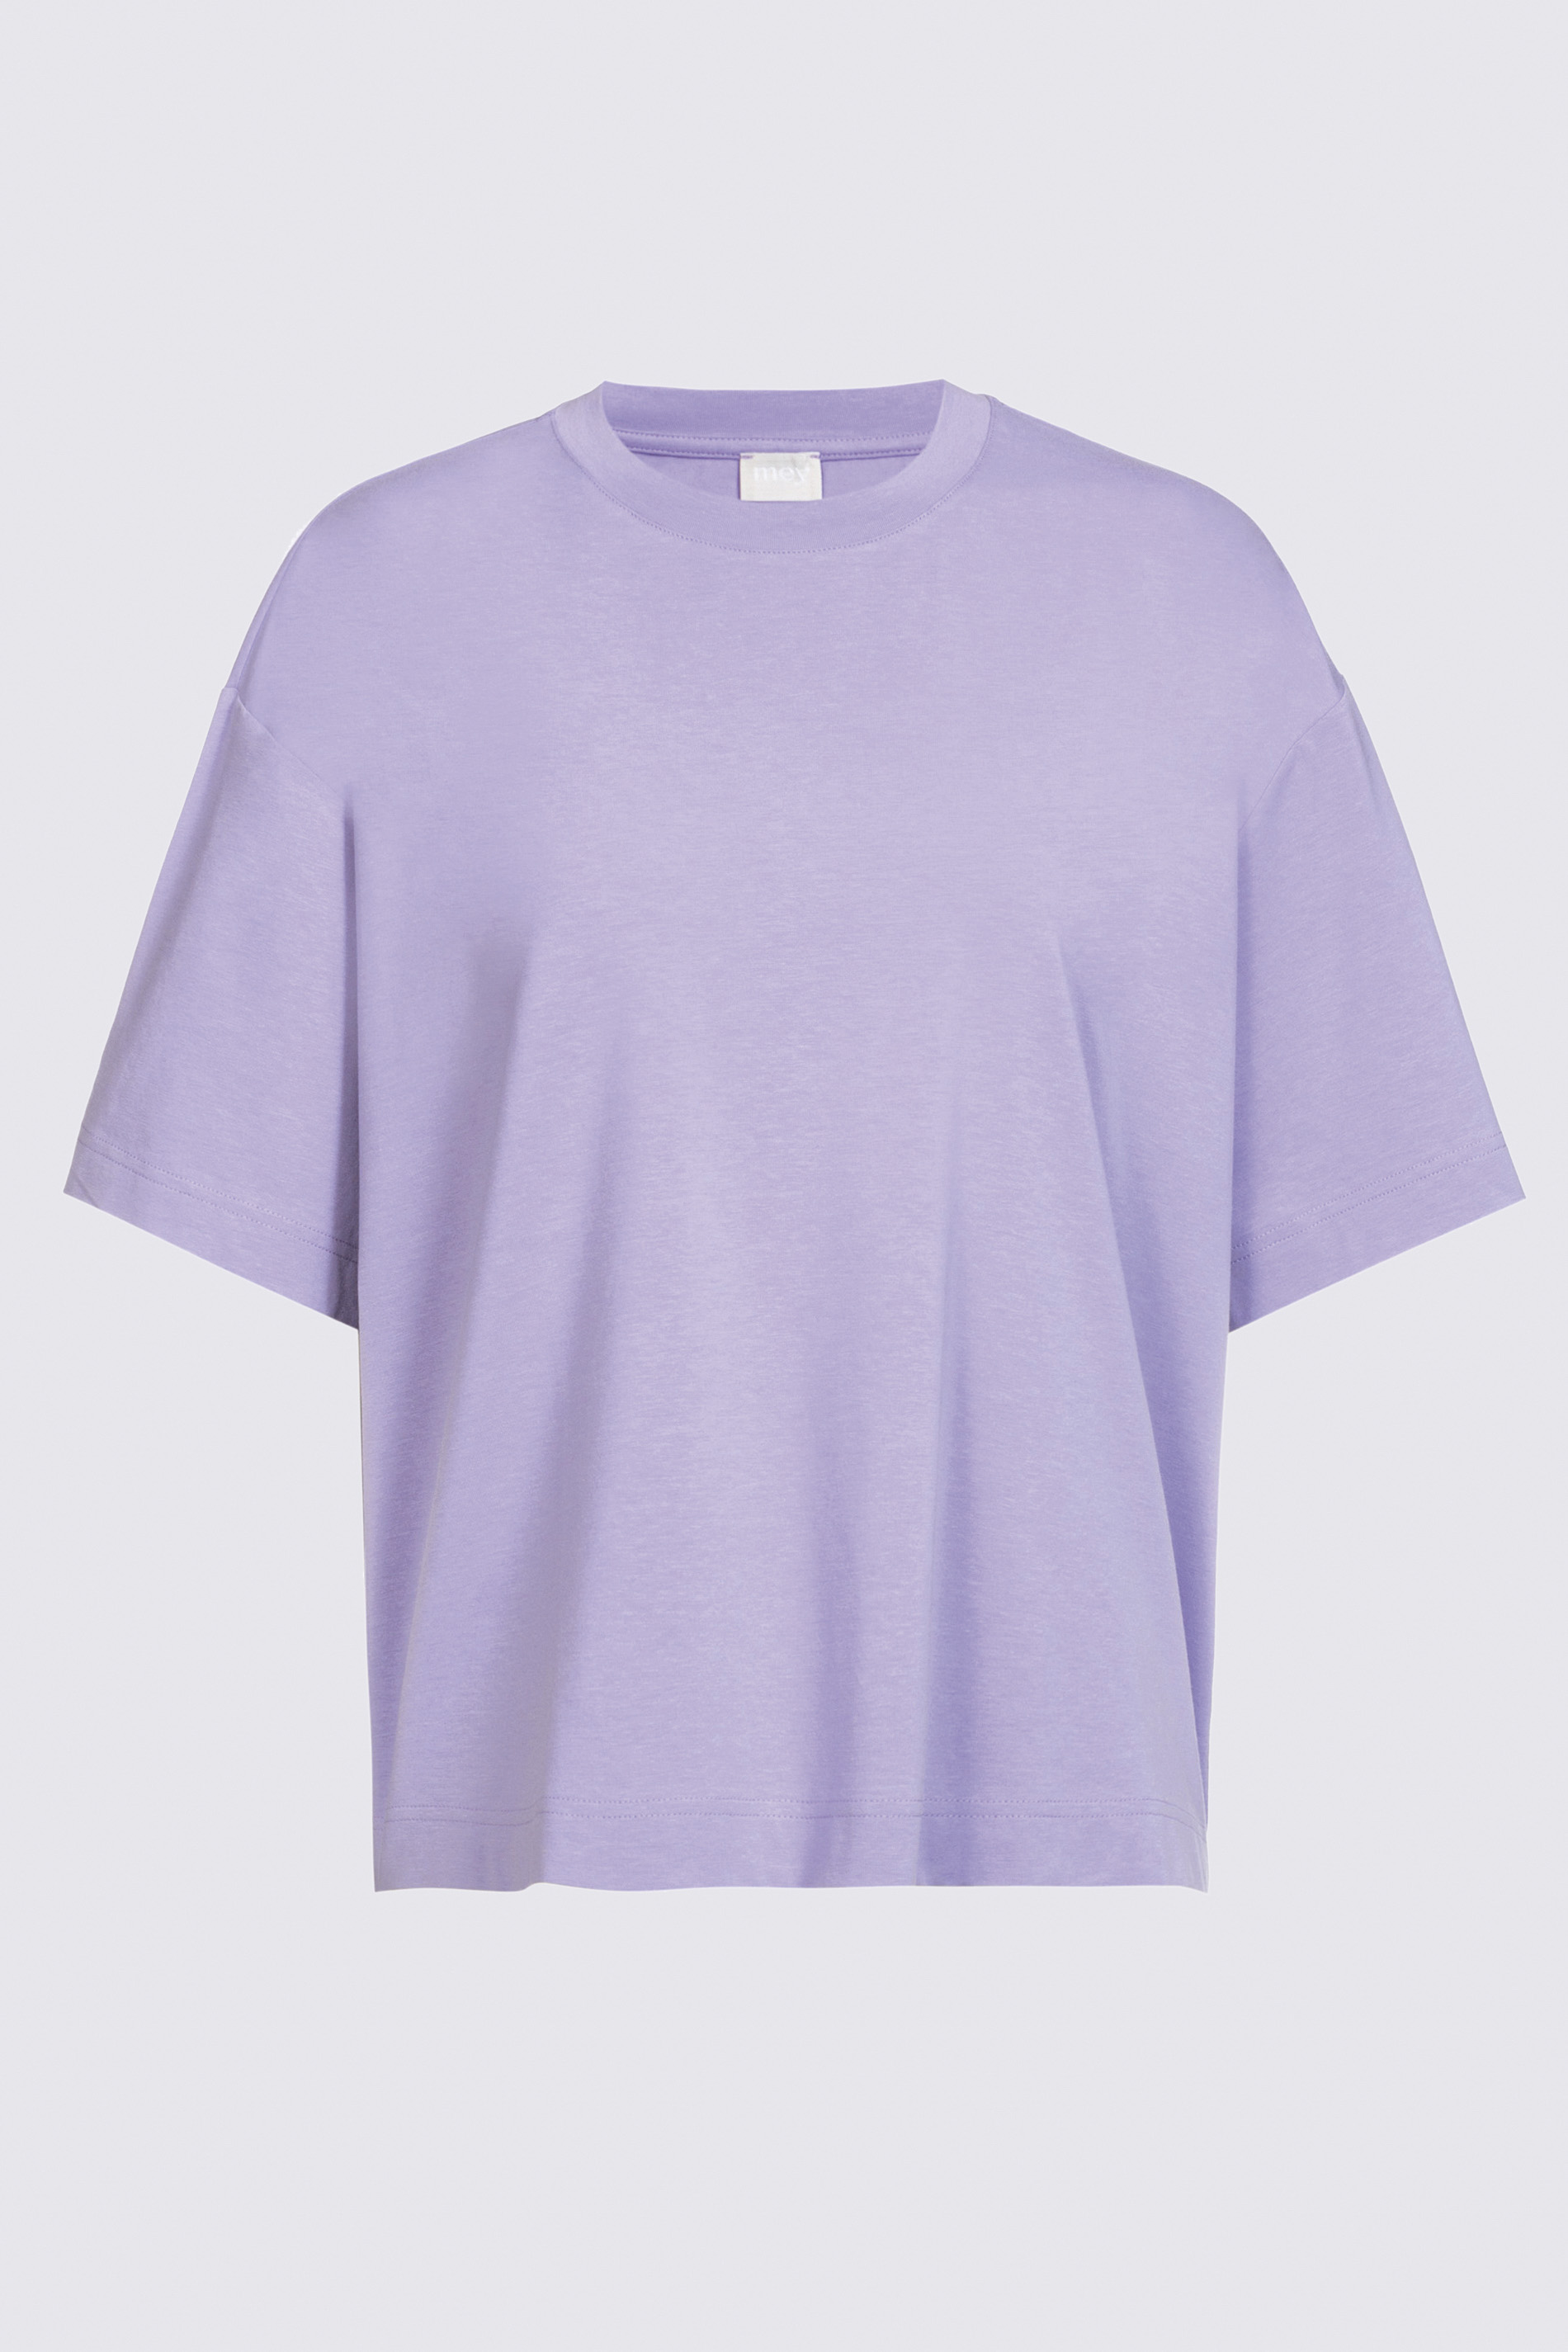 Shirt Lilac Serie Debby Freisteller | mey®